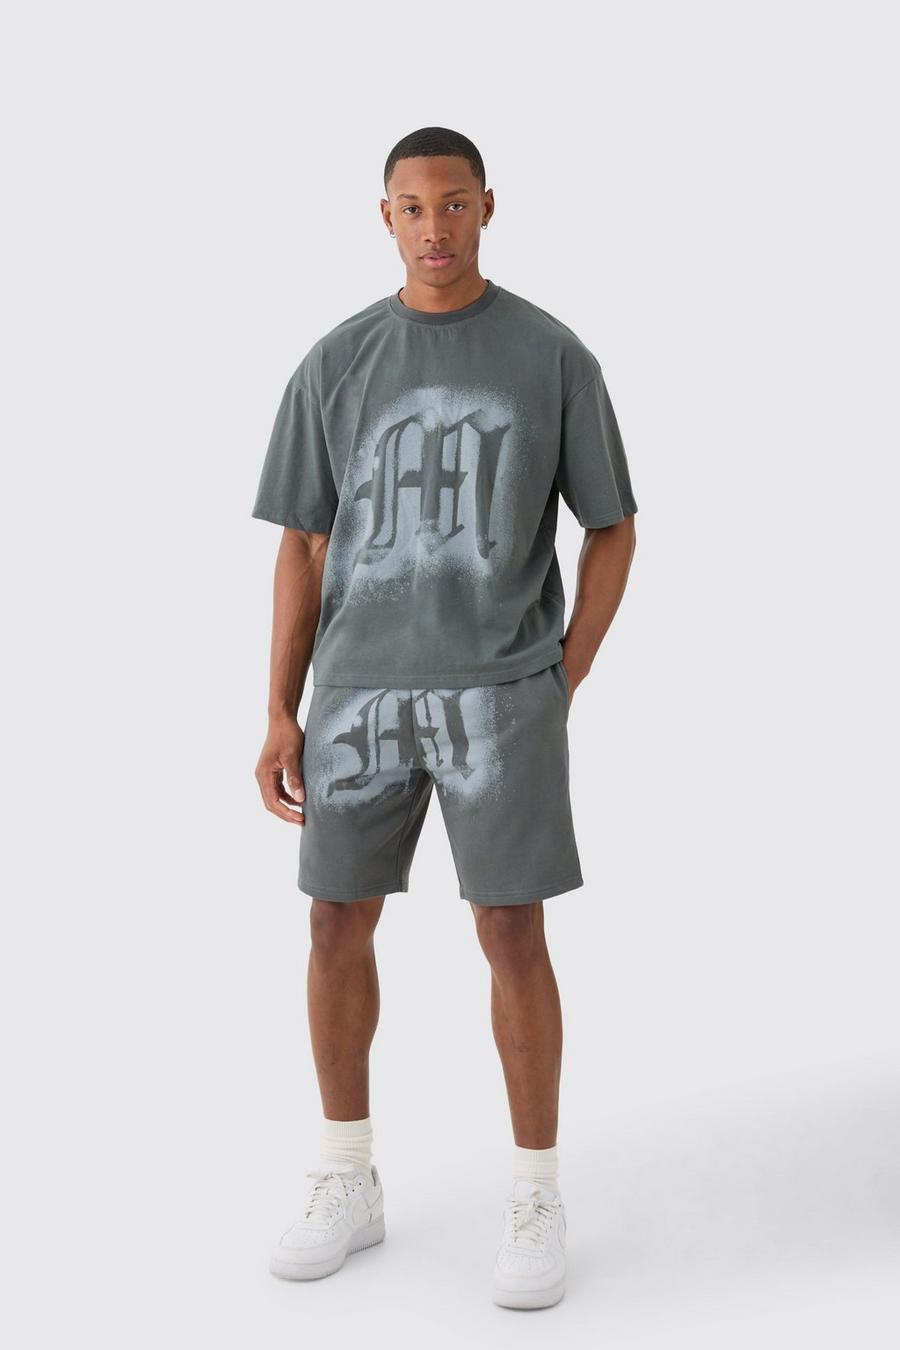 Kastiges Oversize T-Shirt-Set mit Graffiti-Print, Grey